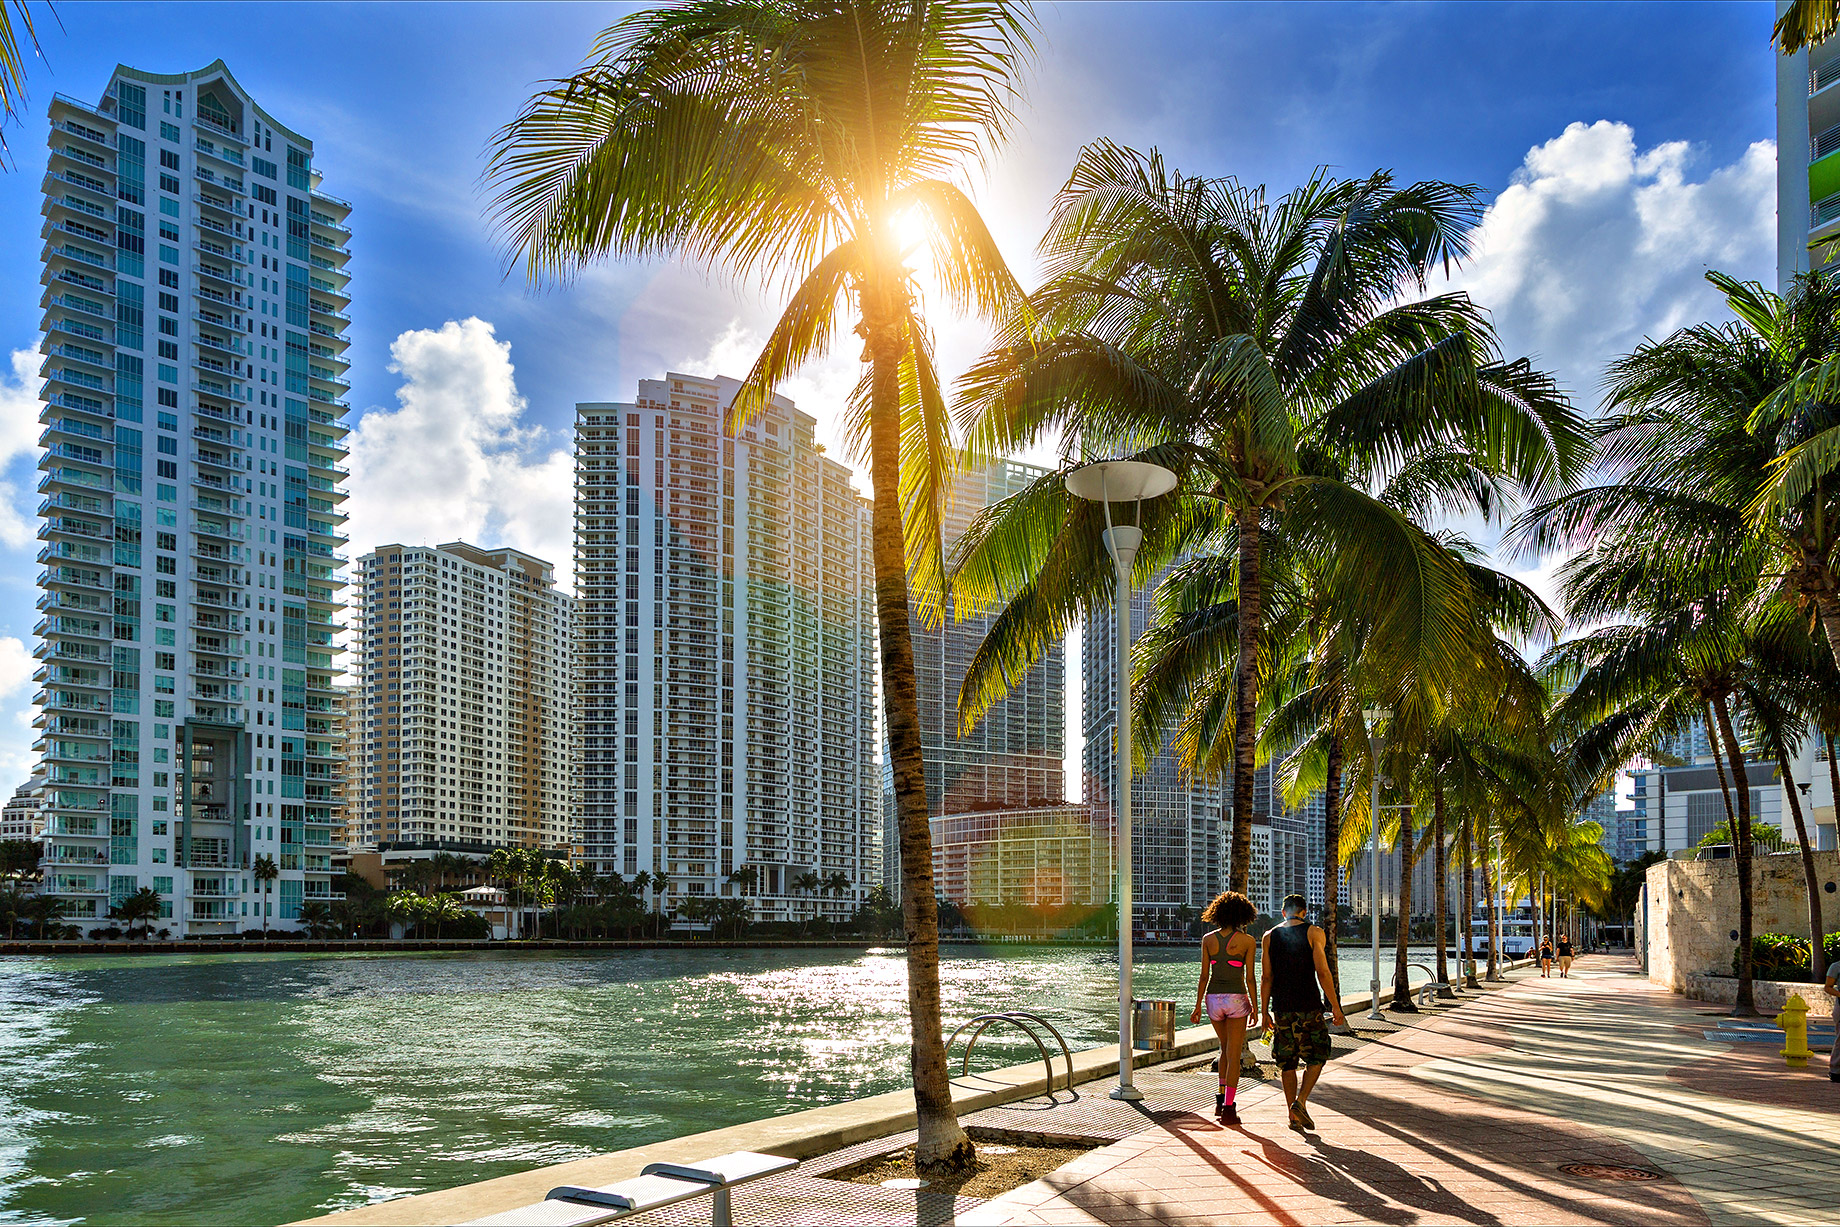 Miami River Condos - Downtown Miami, Florida, USA